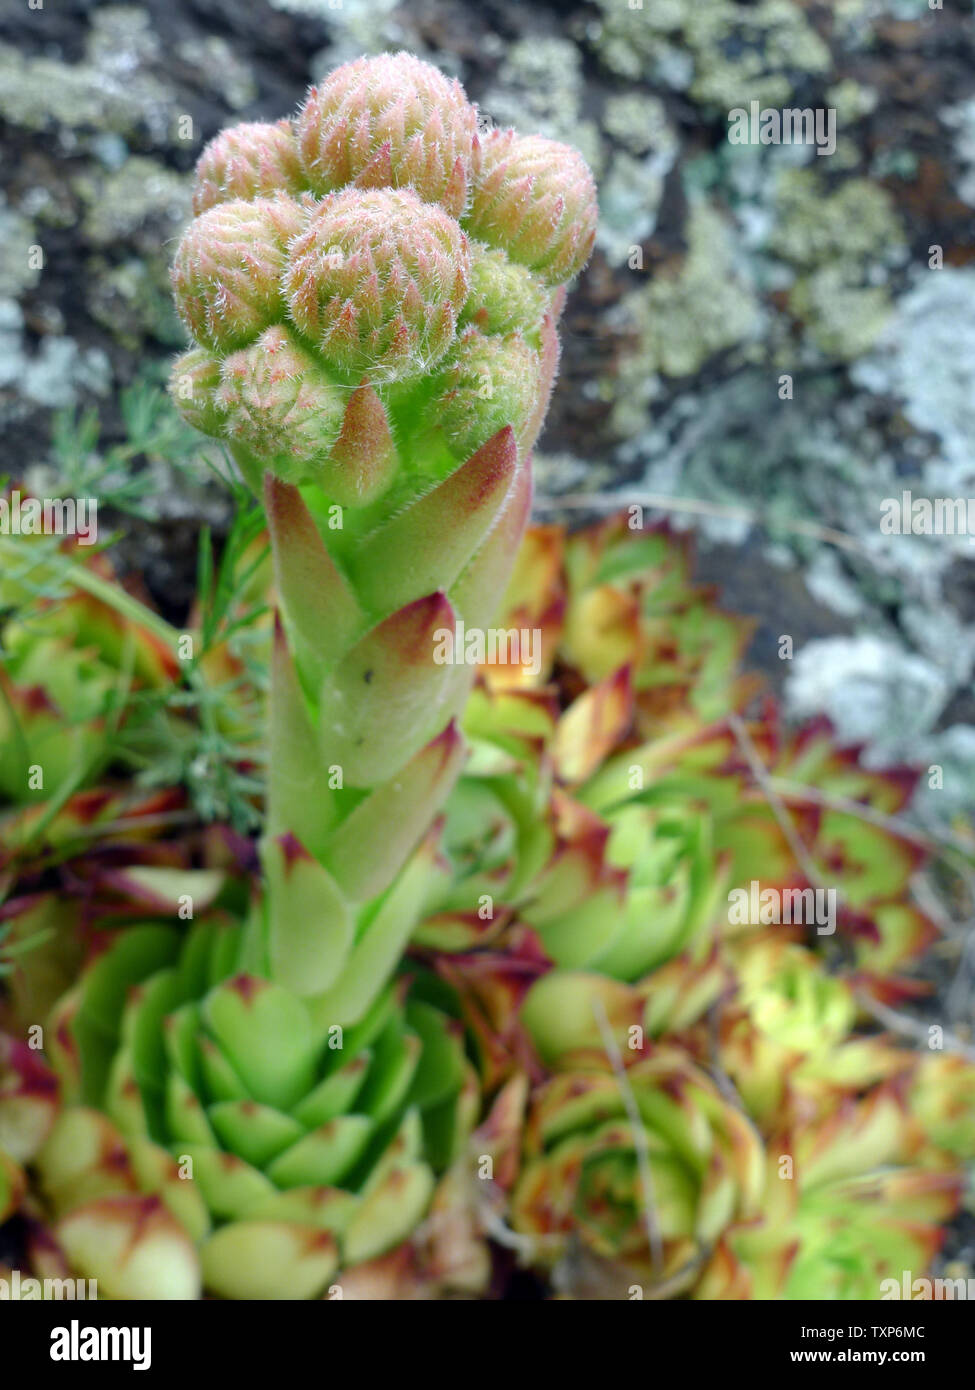 Endangered species Jovibarba globifera (Sempervivum globiferum) on rock Stock Photo